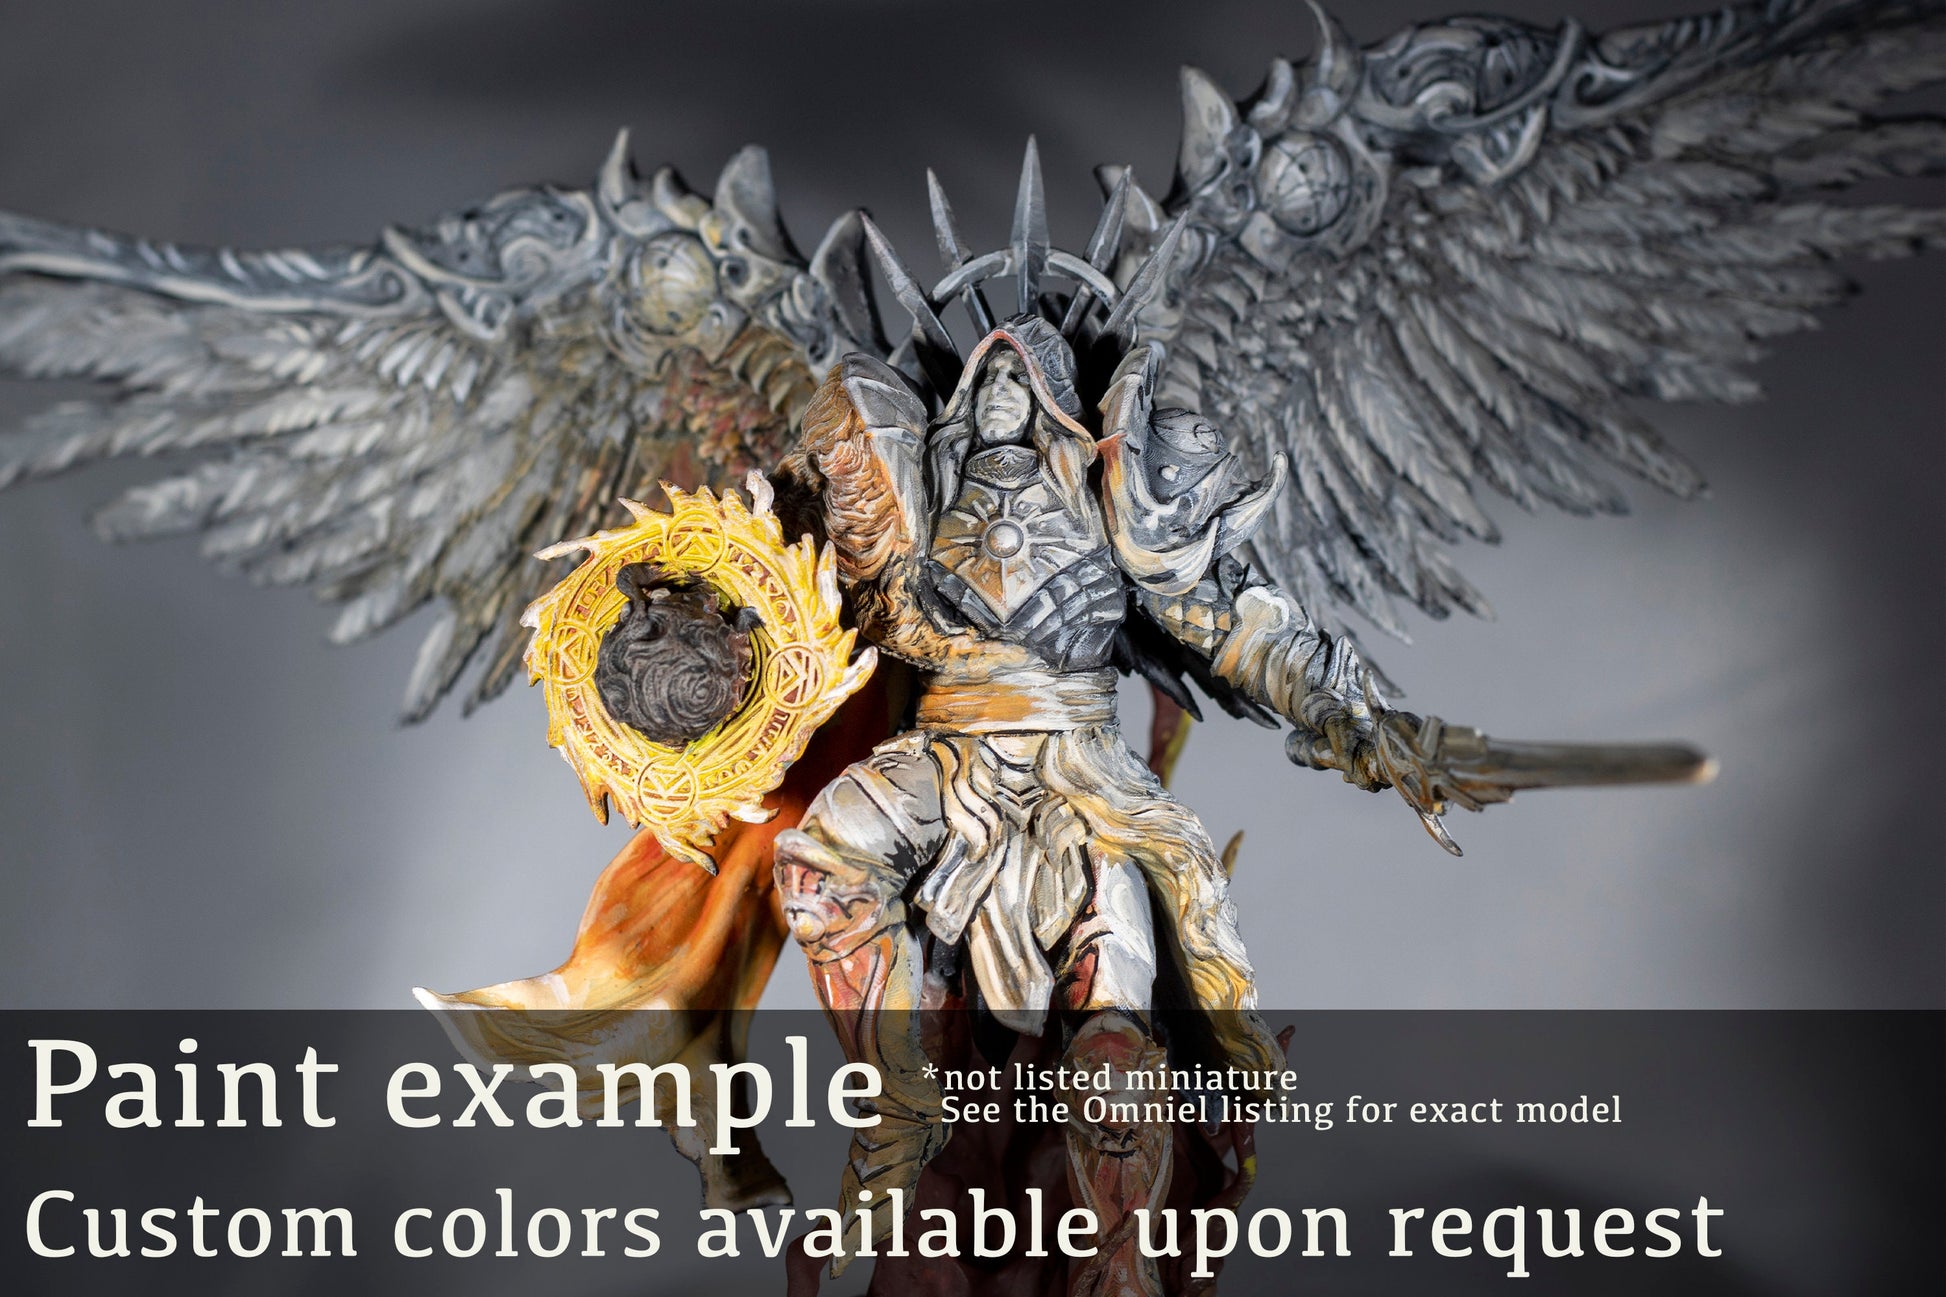 Fallen Angel - Archvillain Games Printed Miniature | Dungeons & Dragons | Pathfinder | Tabletop